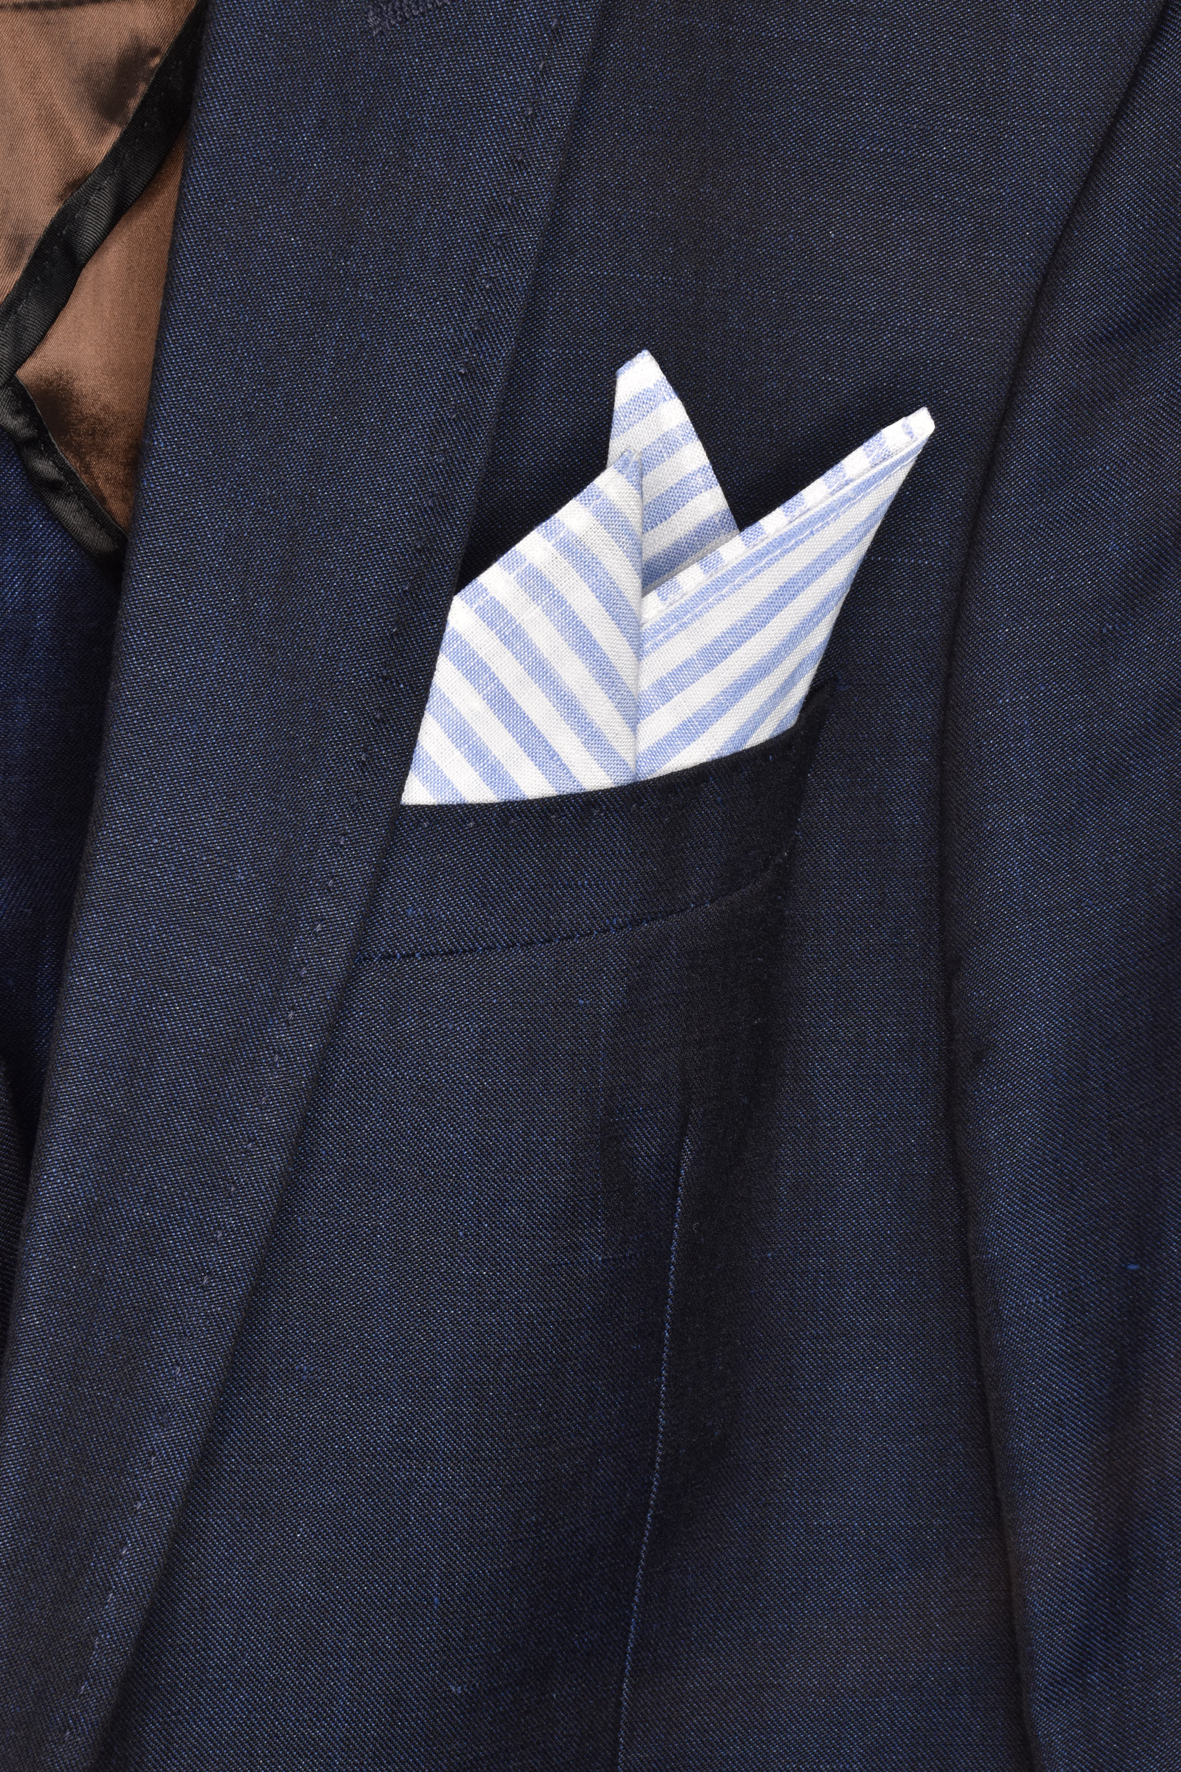 Pochette celeste rigato / pochette de costume rayée bleue et blanche